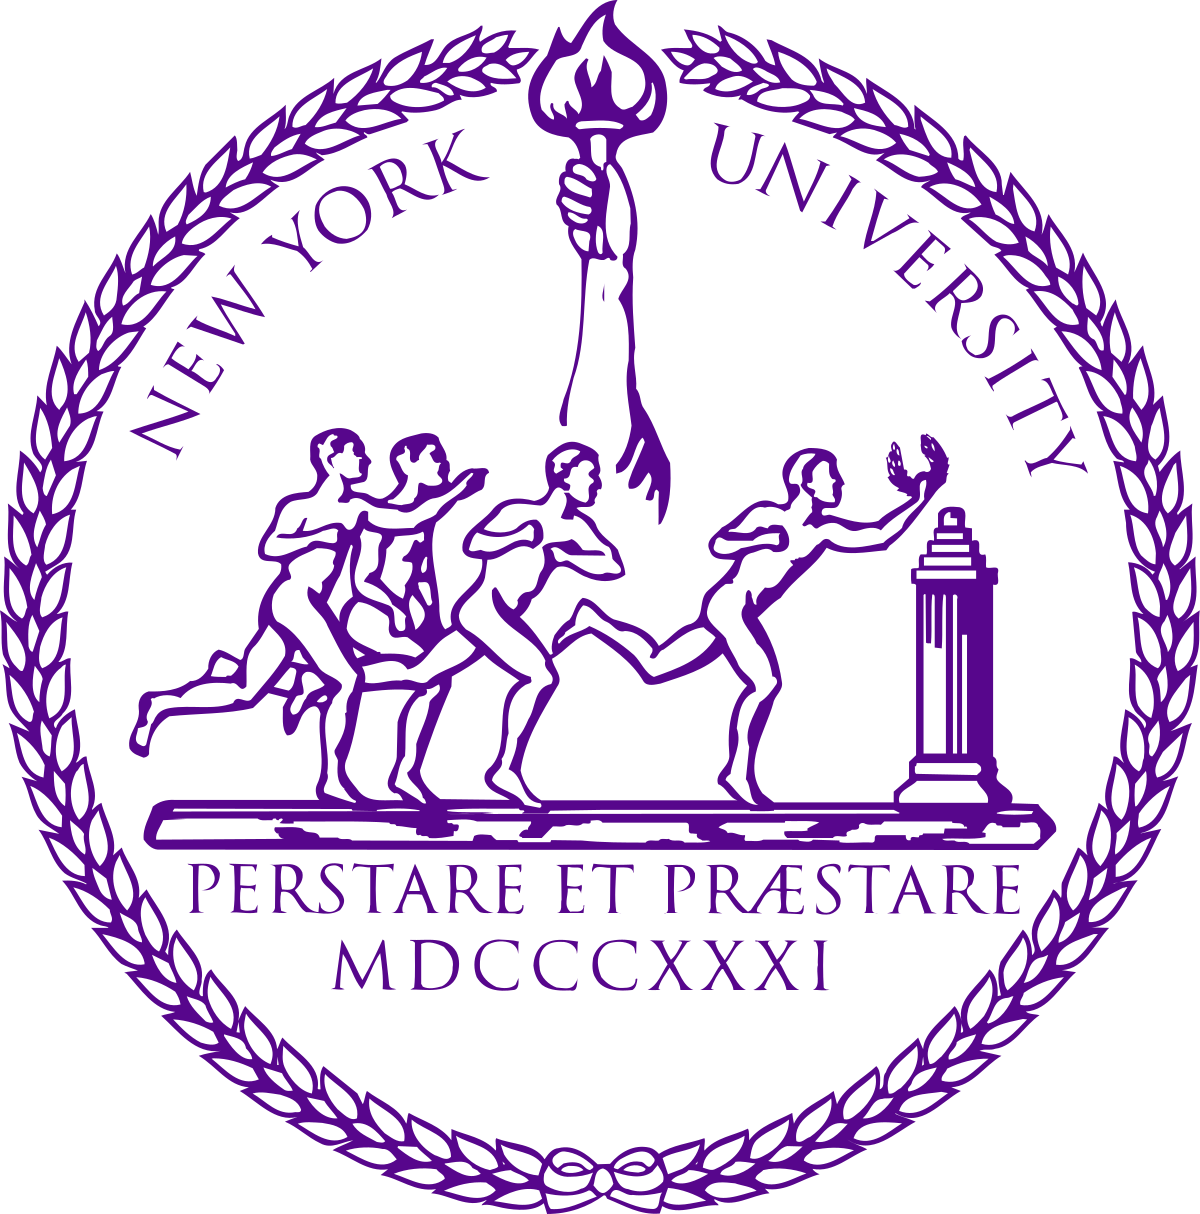 NYULMC Logo - New York University